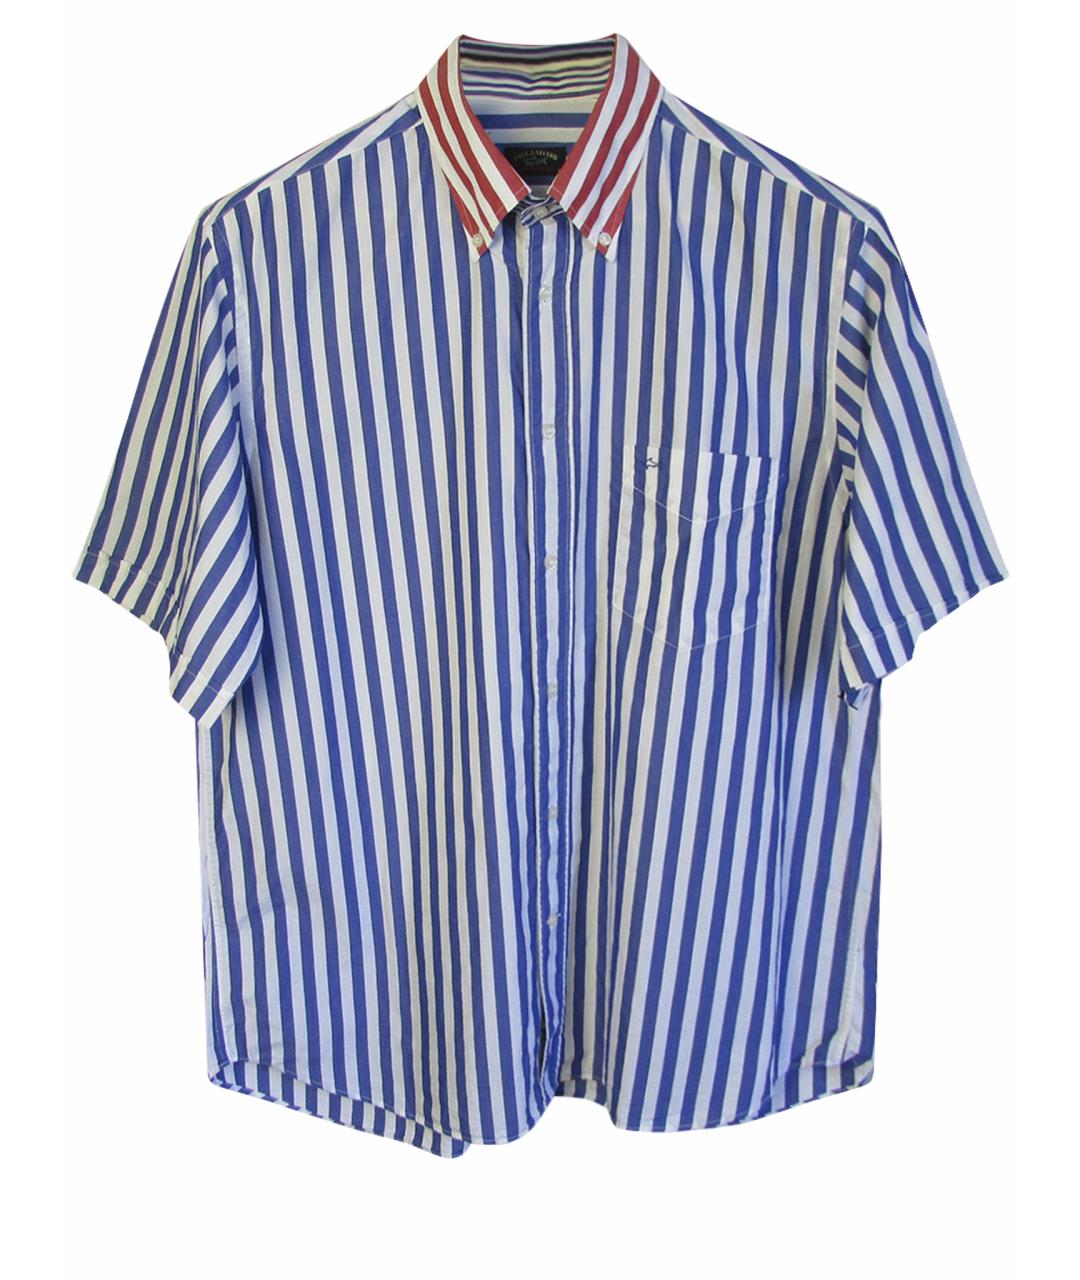 PAUL & SHARK Синяя хлопковая кэжуал рубашка, фото 1